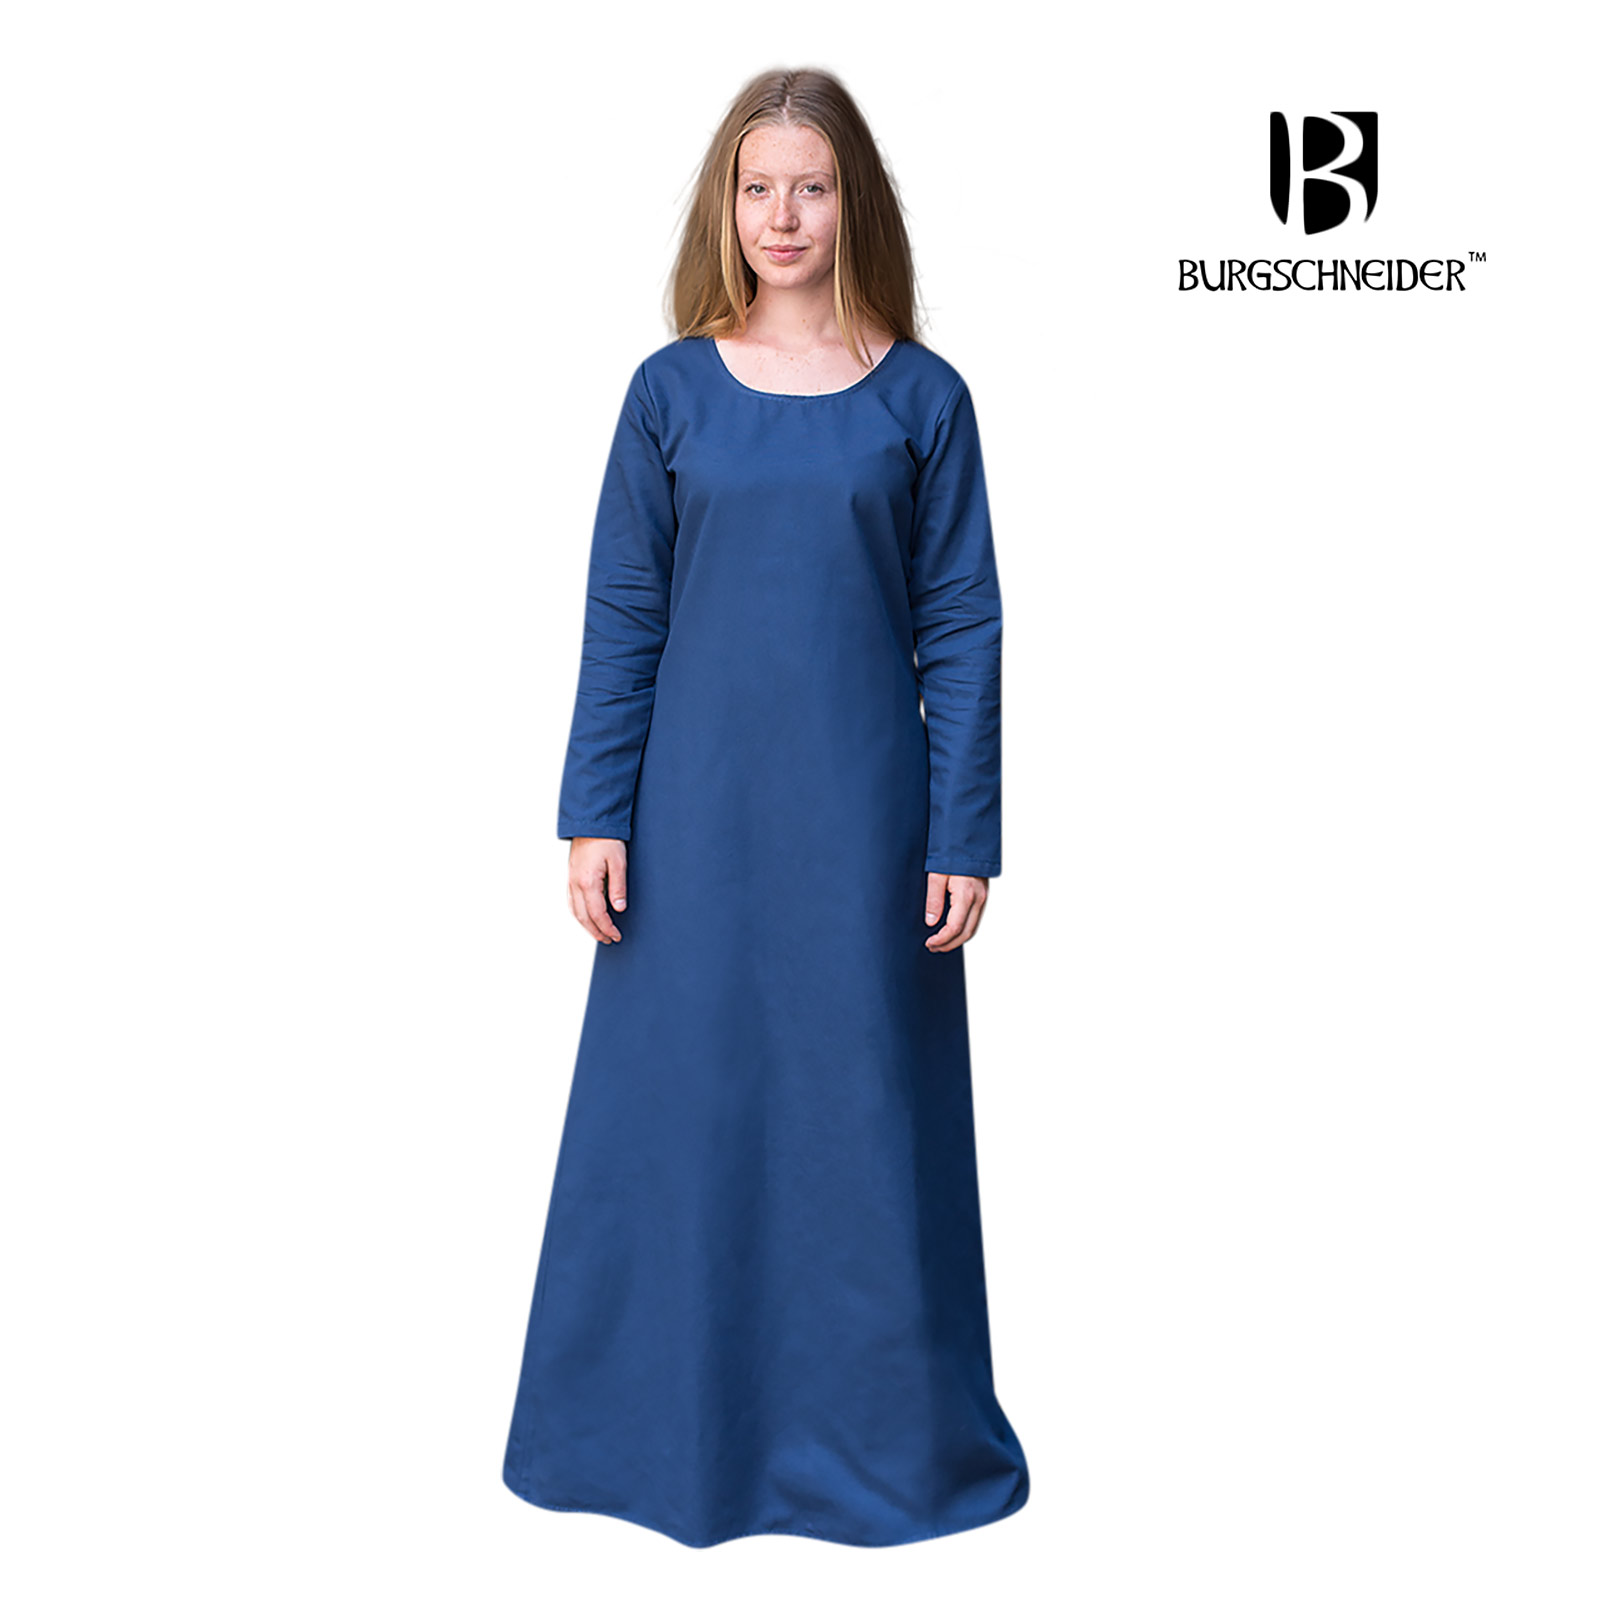 Mittelalter Unterkleid Freya blau